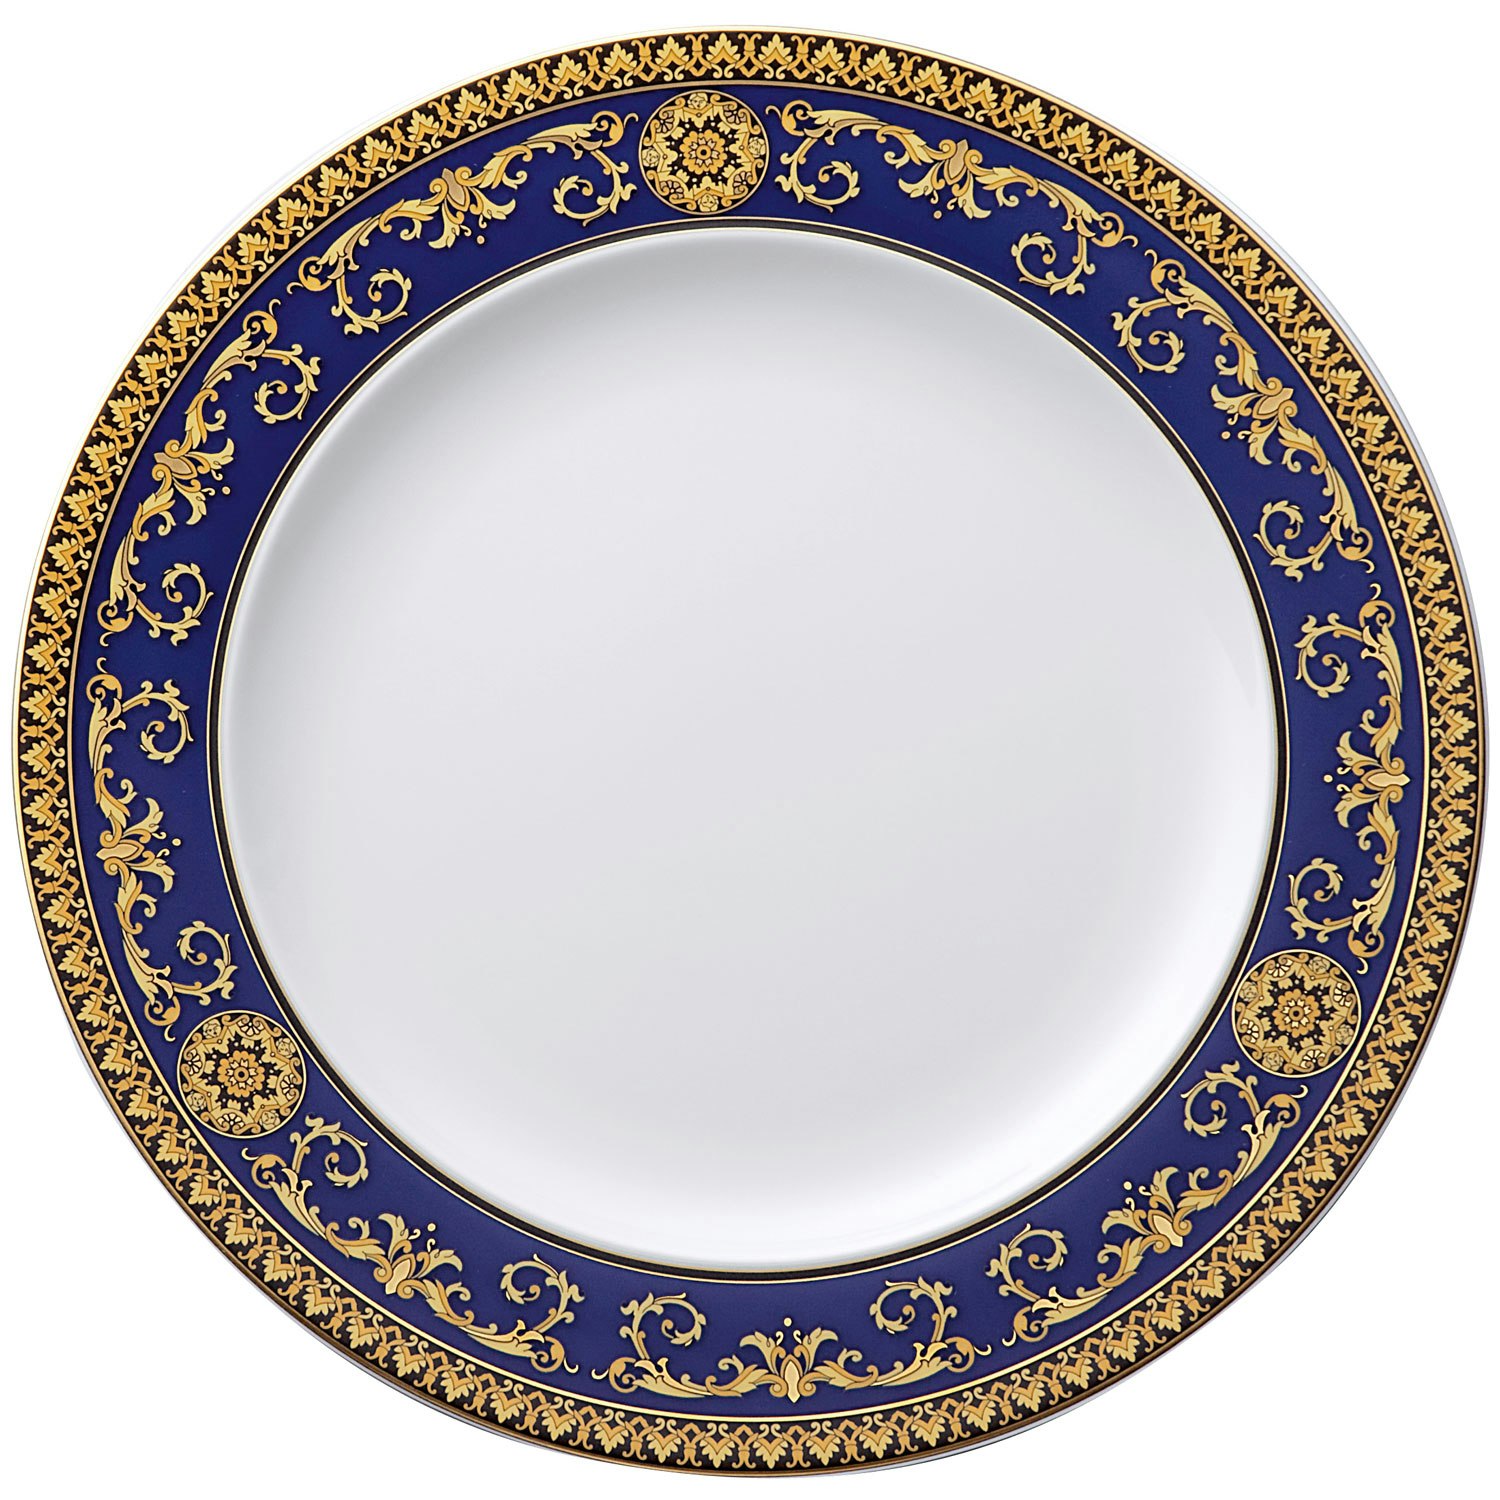 Medusa Rhapsody Service Plate, 33 cm - Versace @ RoyalDesign